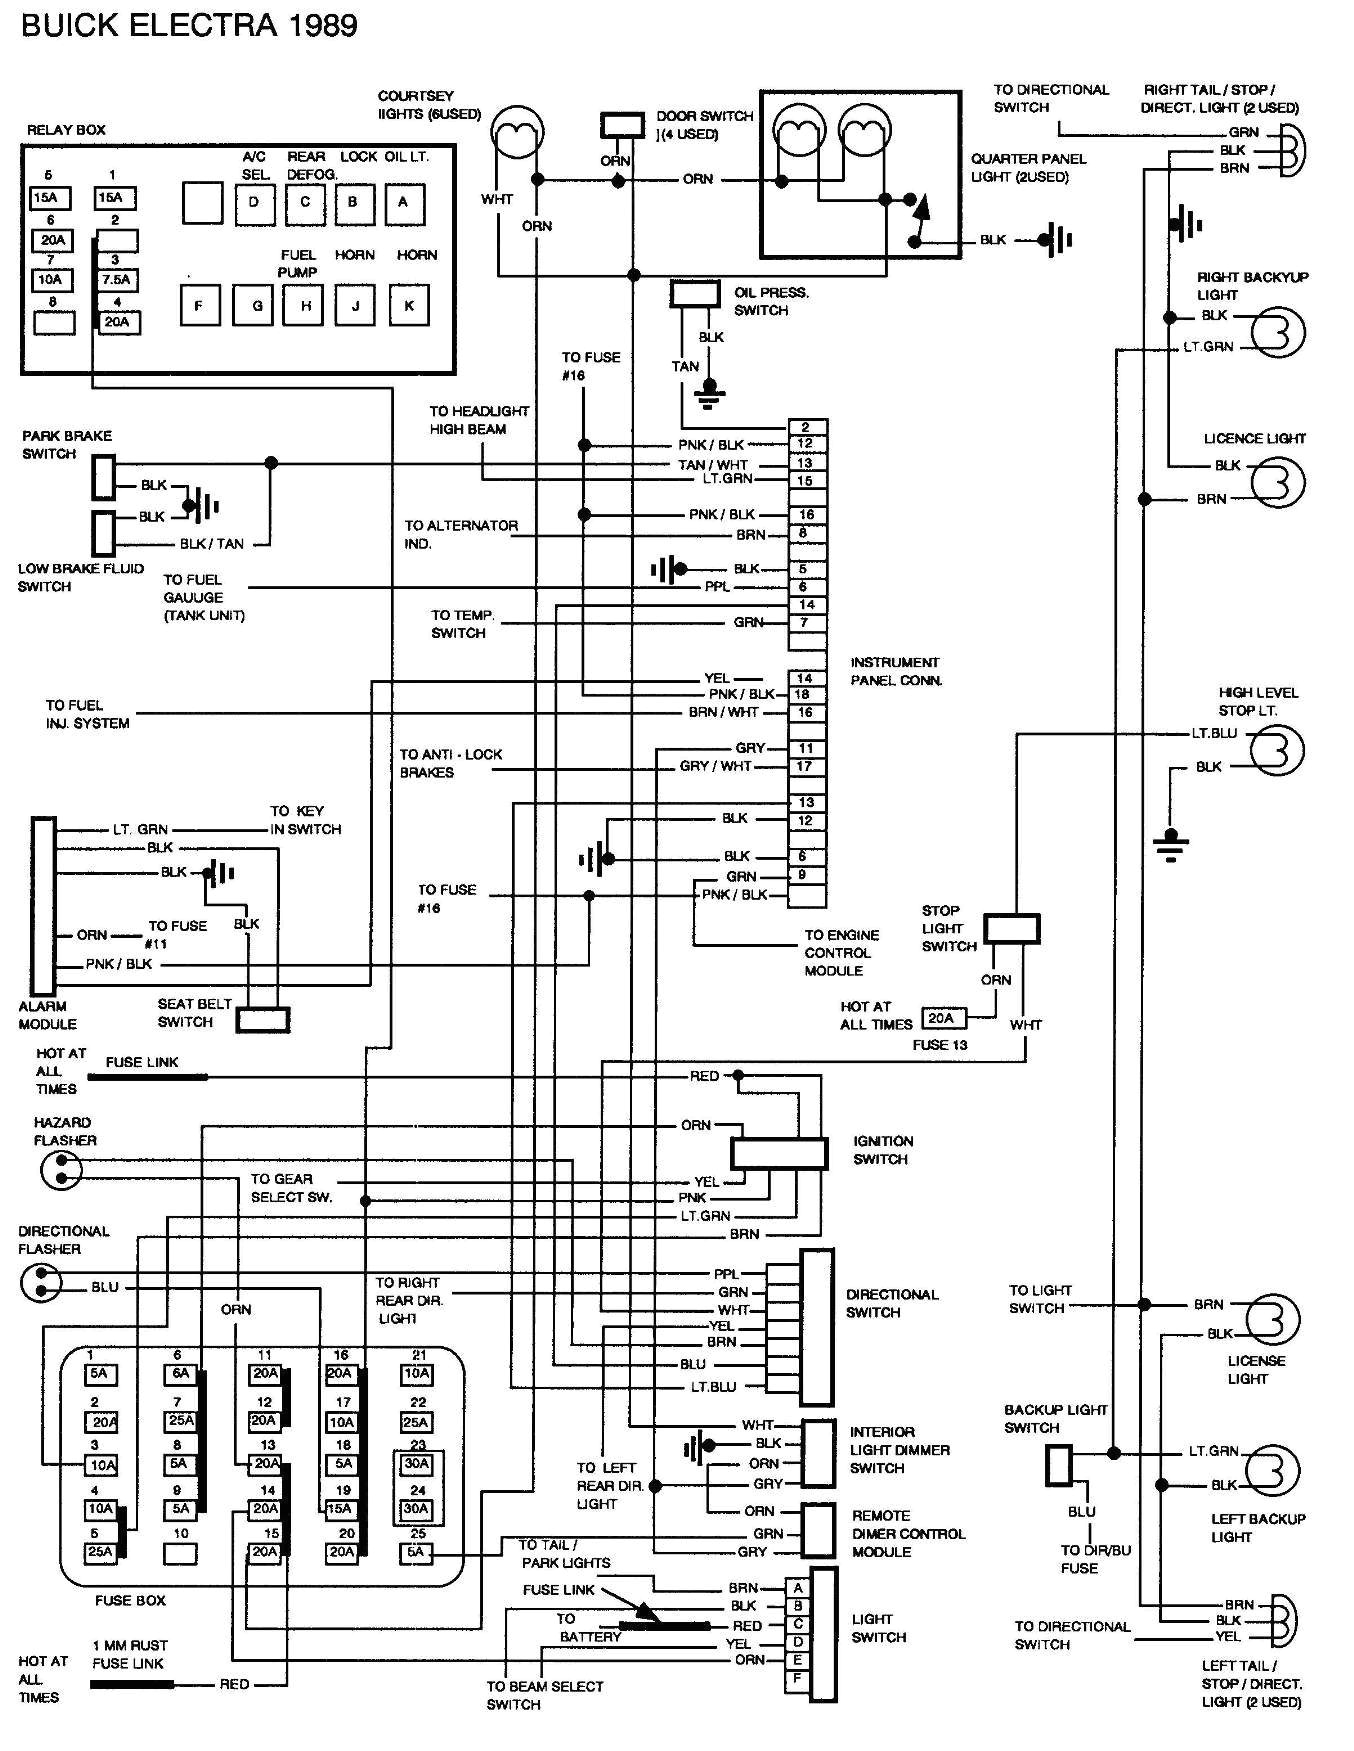 fbp 1 40x wiring diagram wiring diagram centre fbp 1 40x wiring diagram